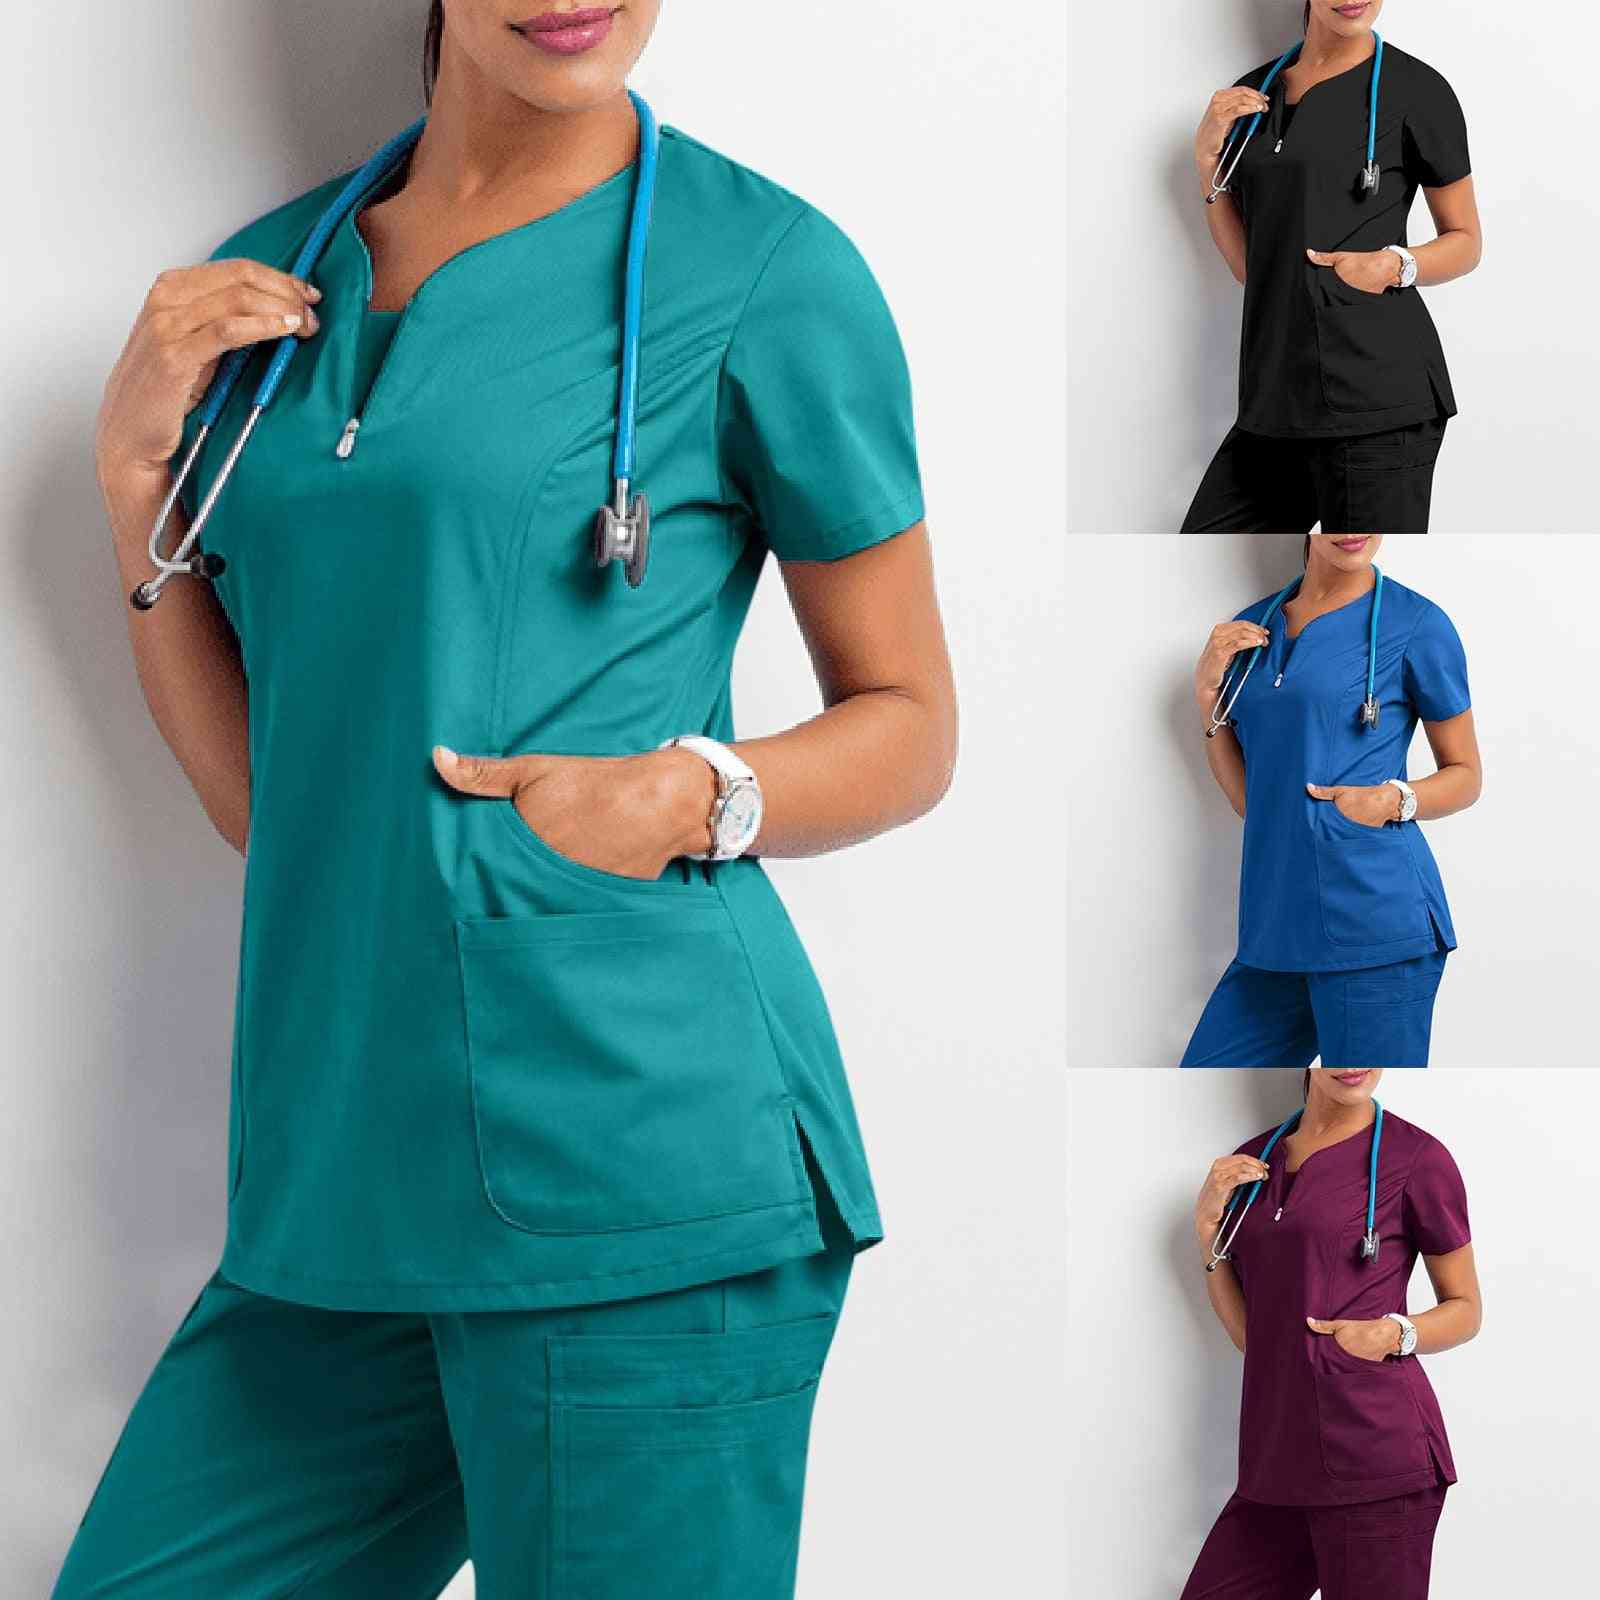 Hospital Staff Scrubs Top For Nursing Uniform